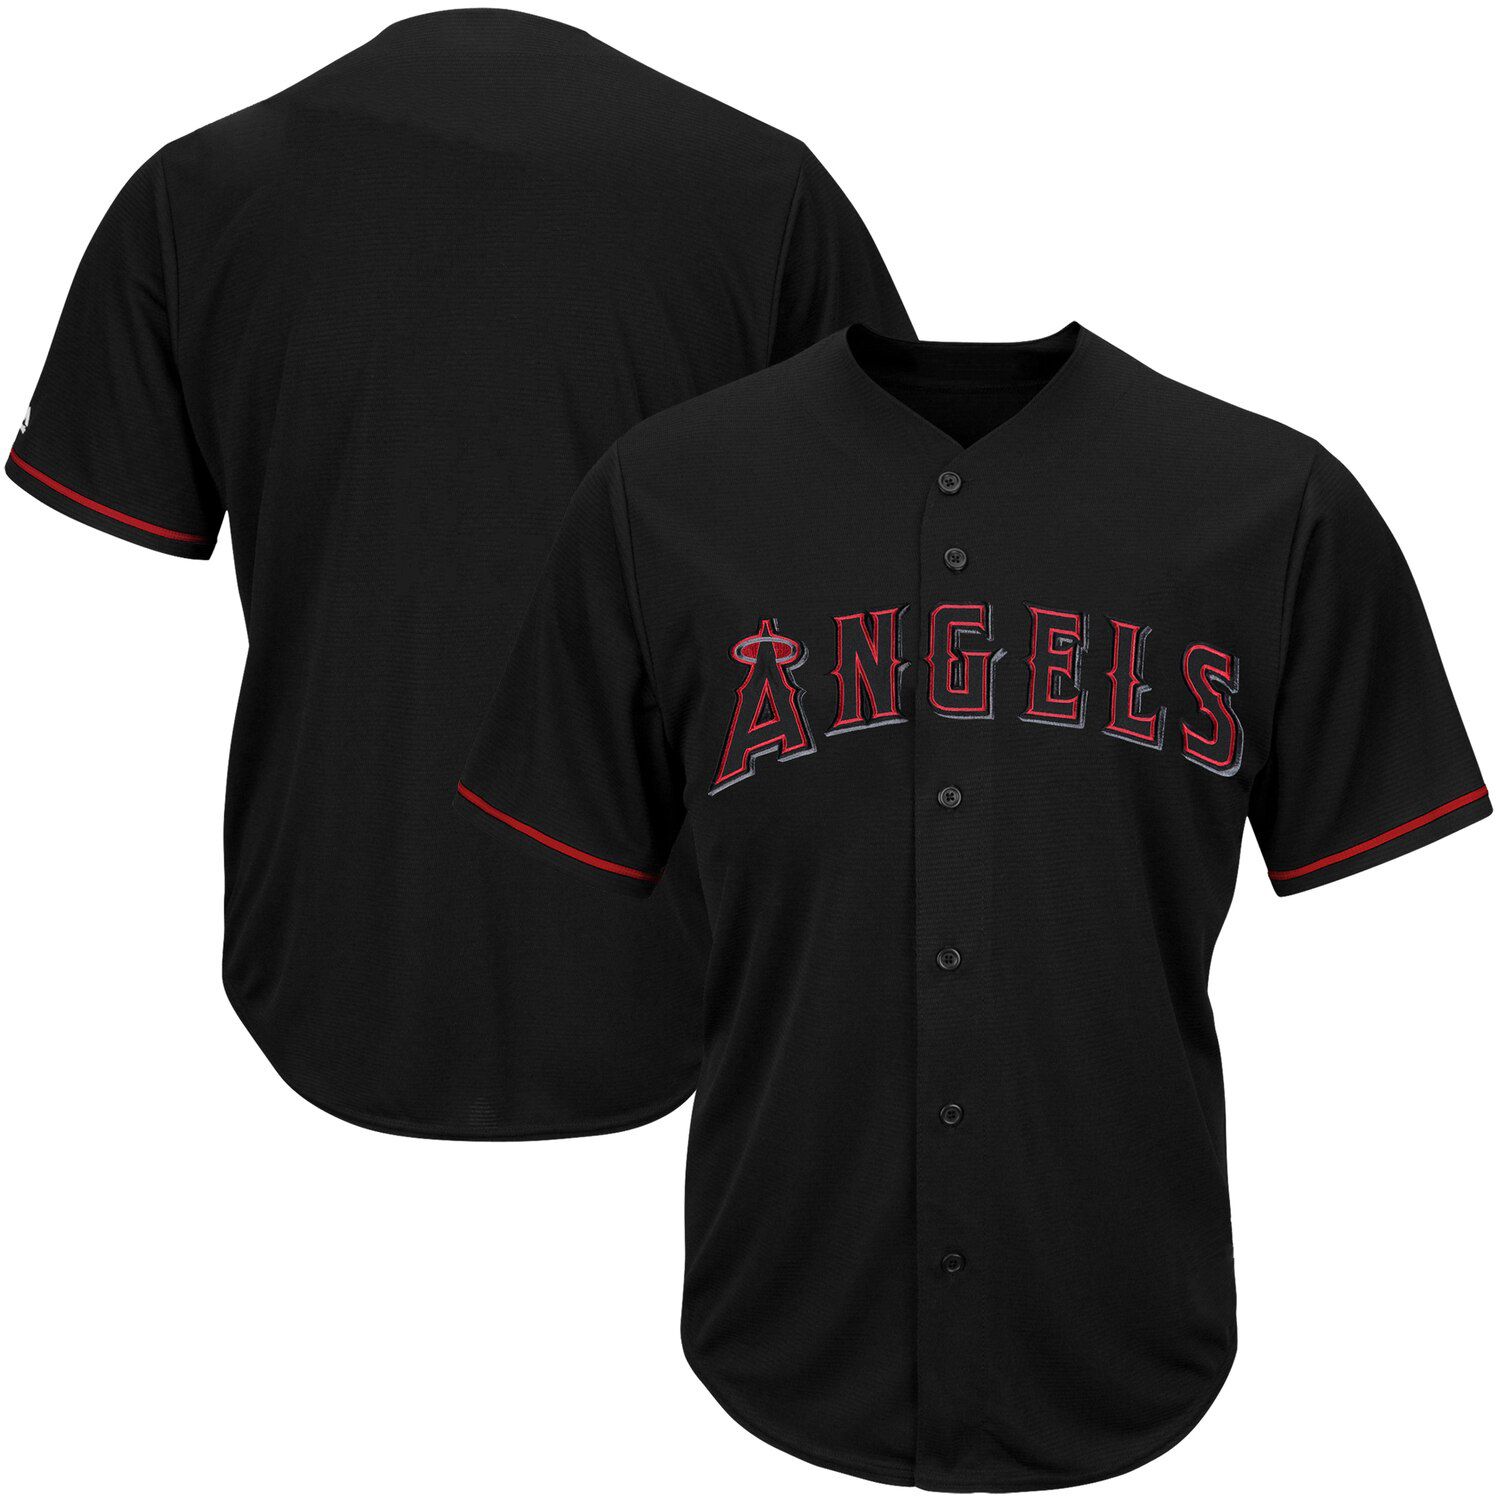 Los Angeles Angels jersey deals